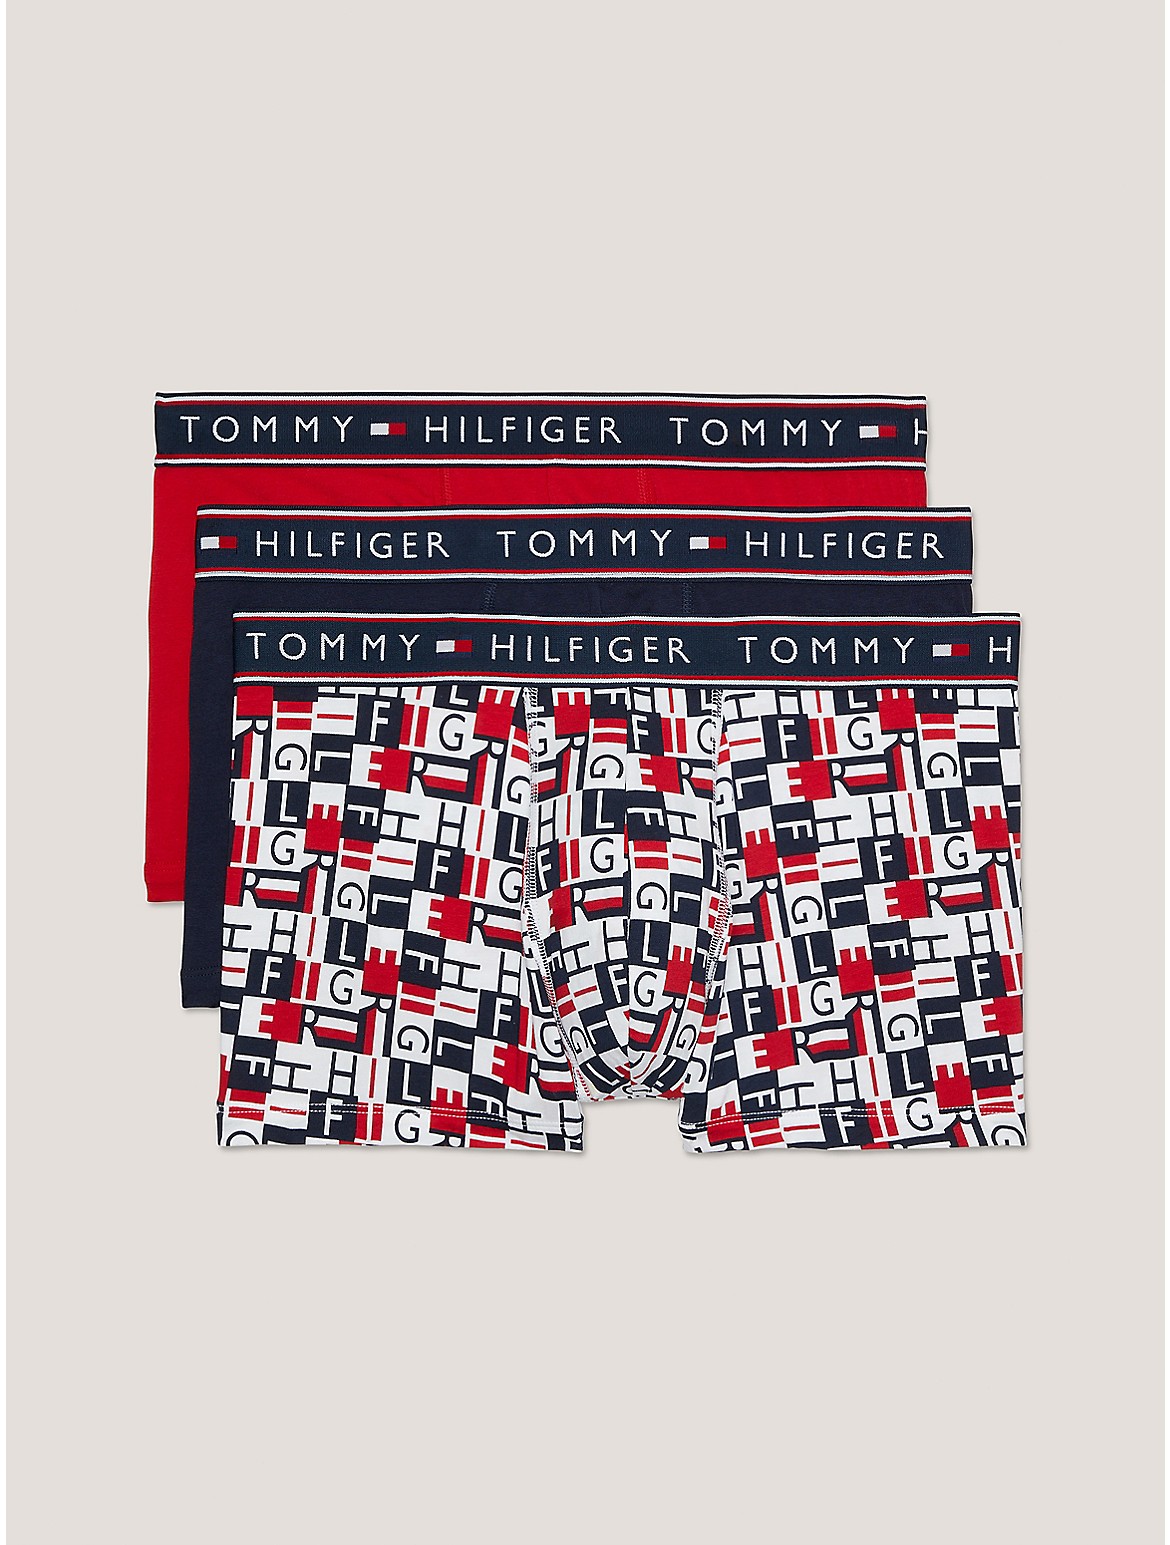 Tommy Hilfiger Men's Cotton Stretch Trunk 3-Pack